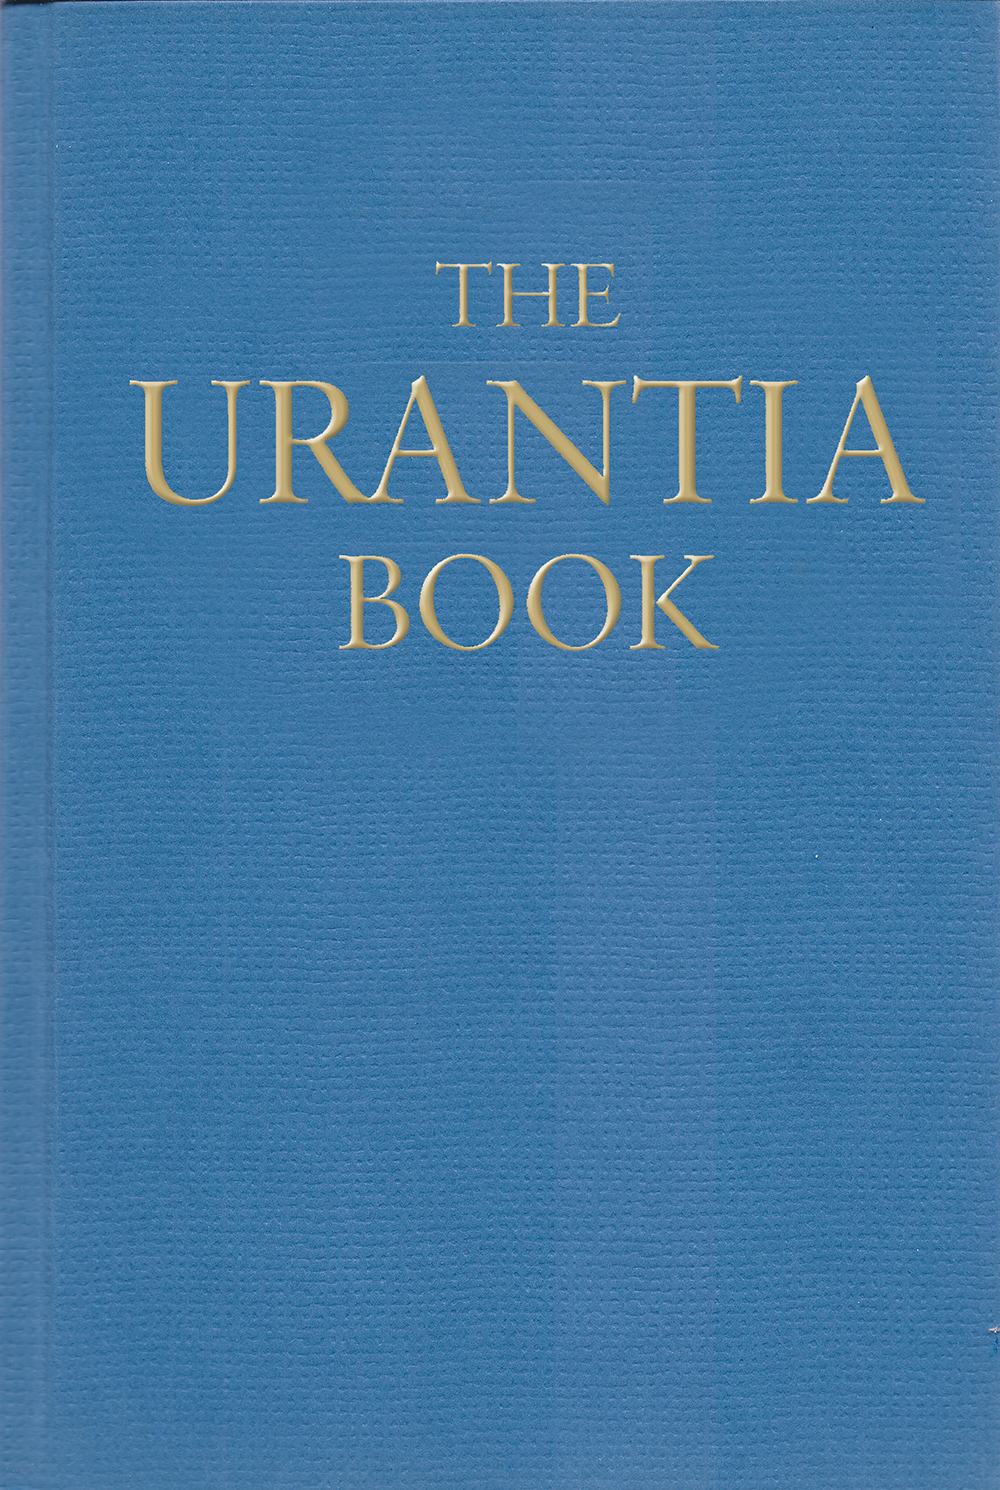 2013 The Urantia Book - Big Blue without jacket